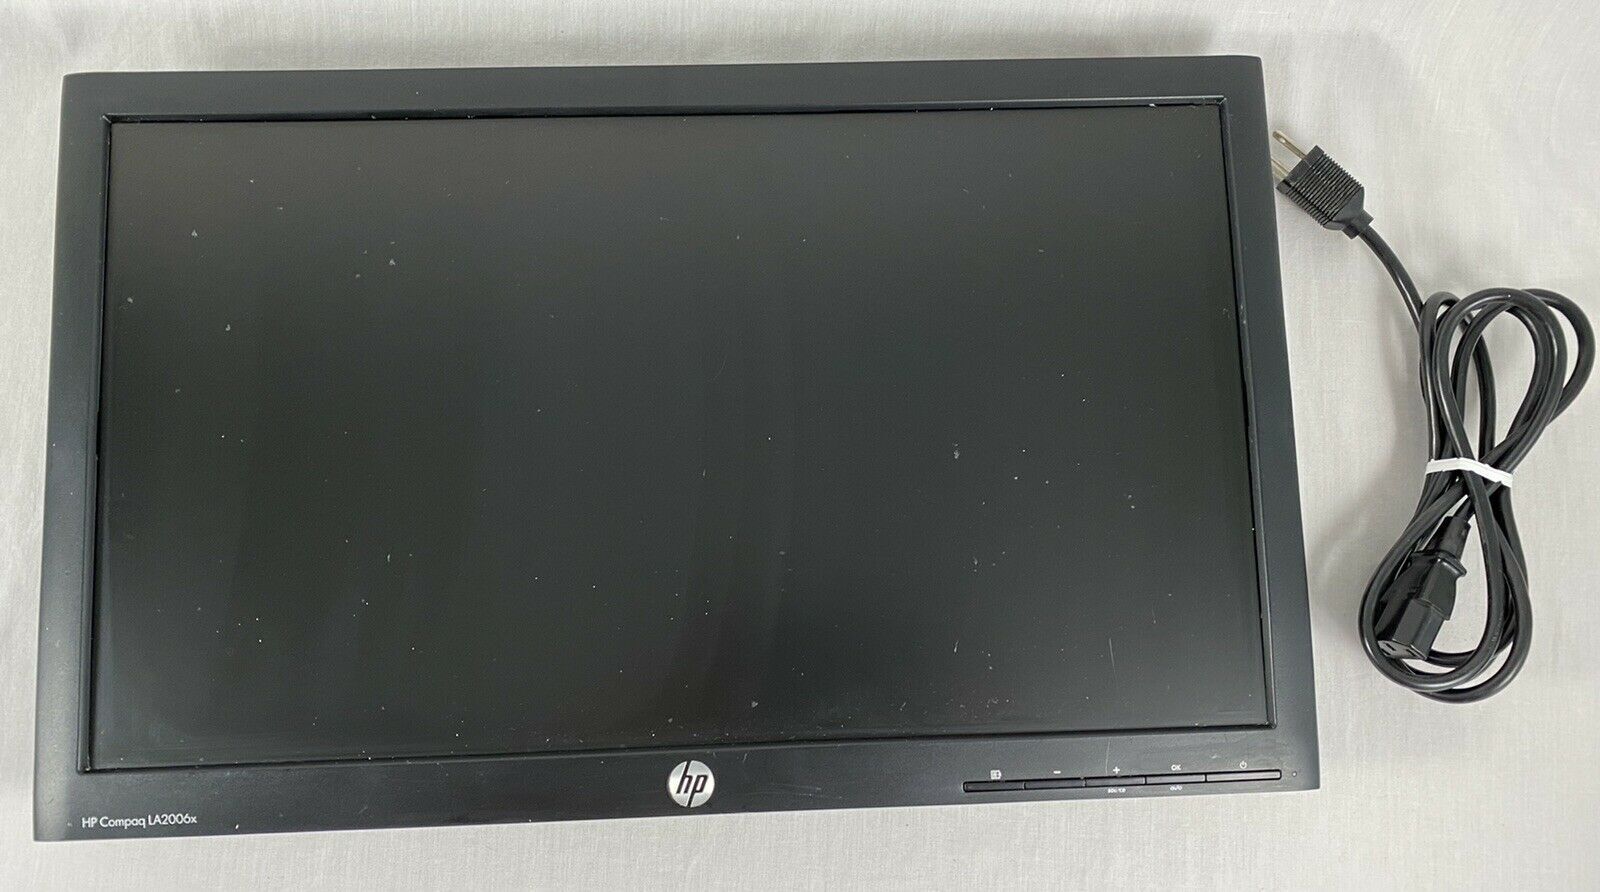 HP Compaq LA2006x 20-inch WLED Backlit LCD 16:9 Monitor DVI VGA USB No stand